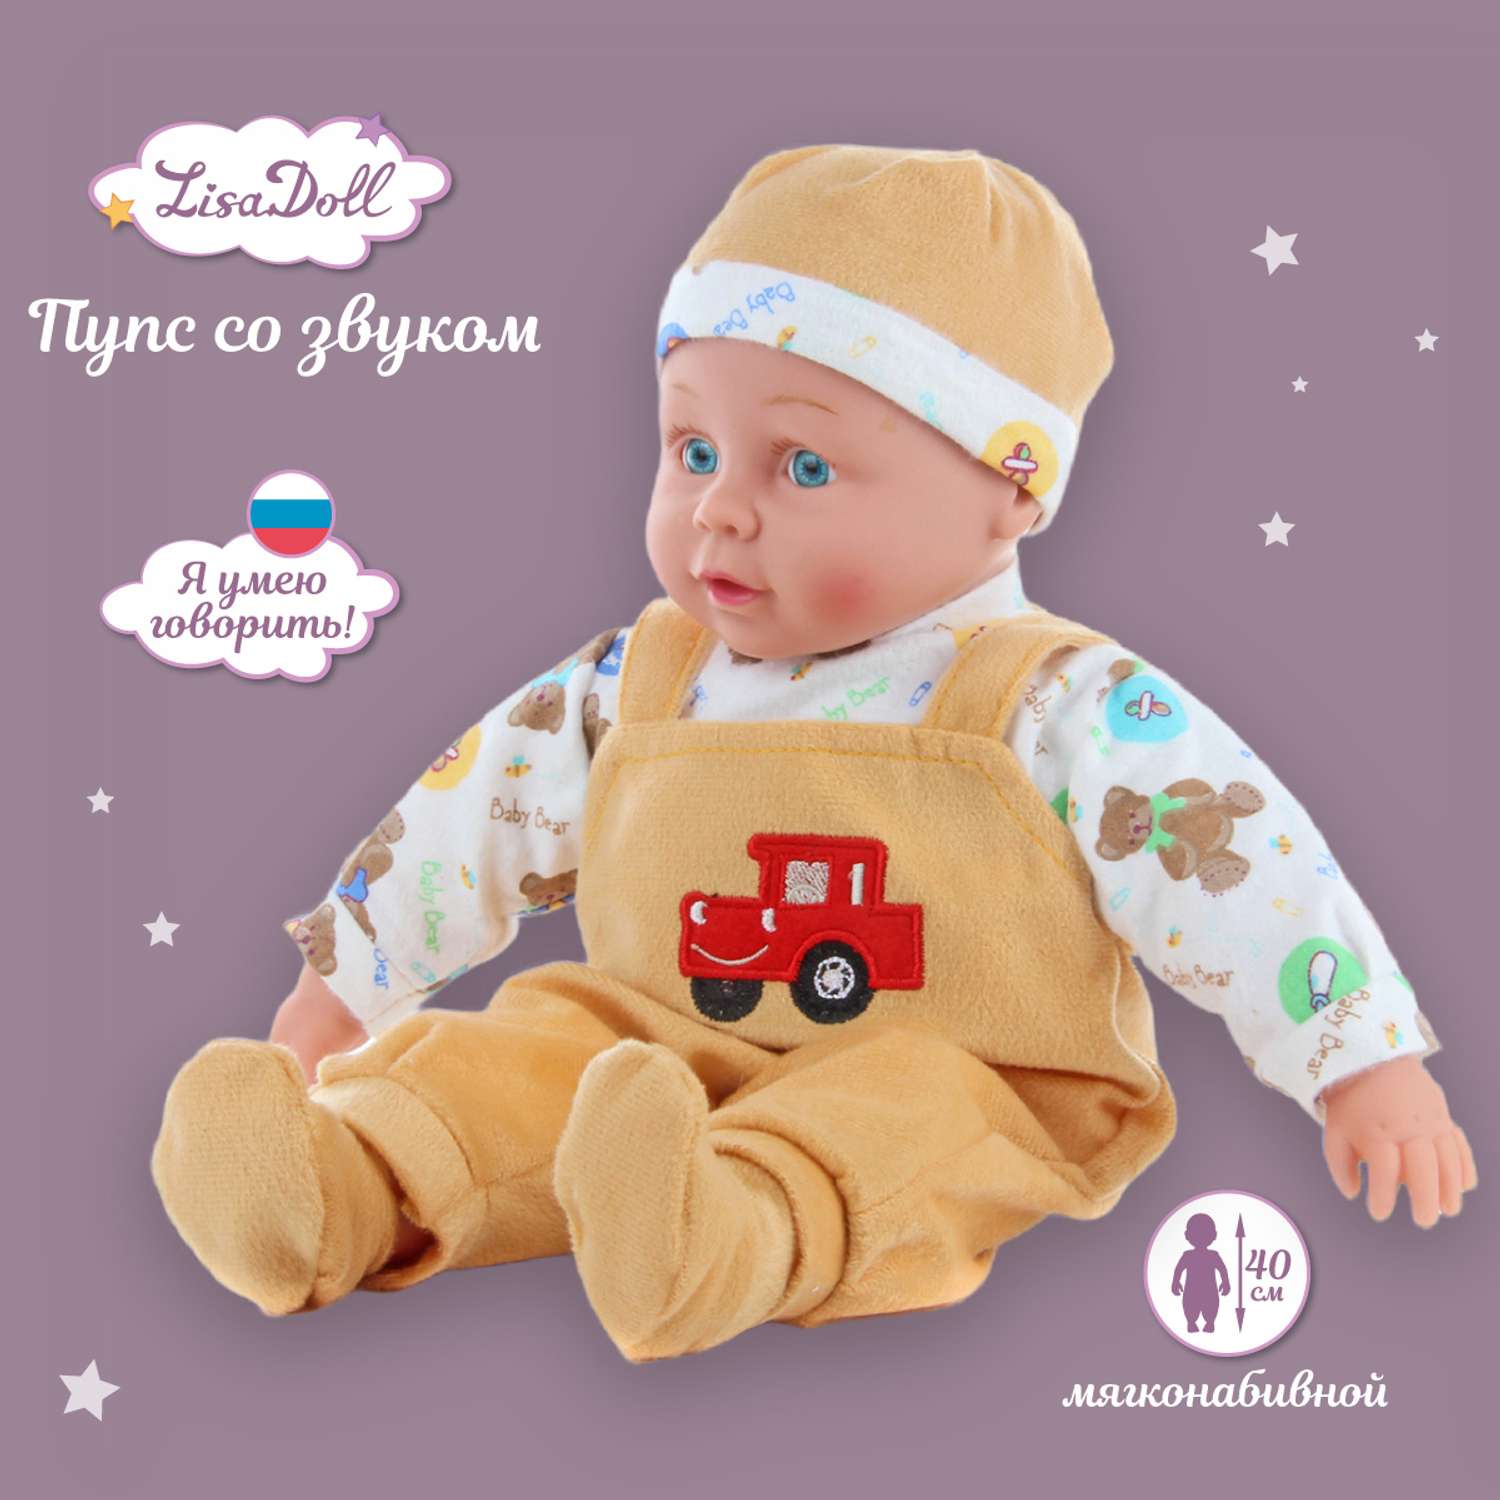 Кукла пупс Lisa Doll 40 см русская озвучка 97043 - фото 1